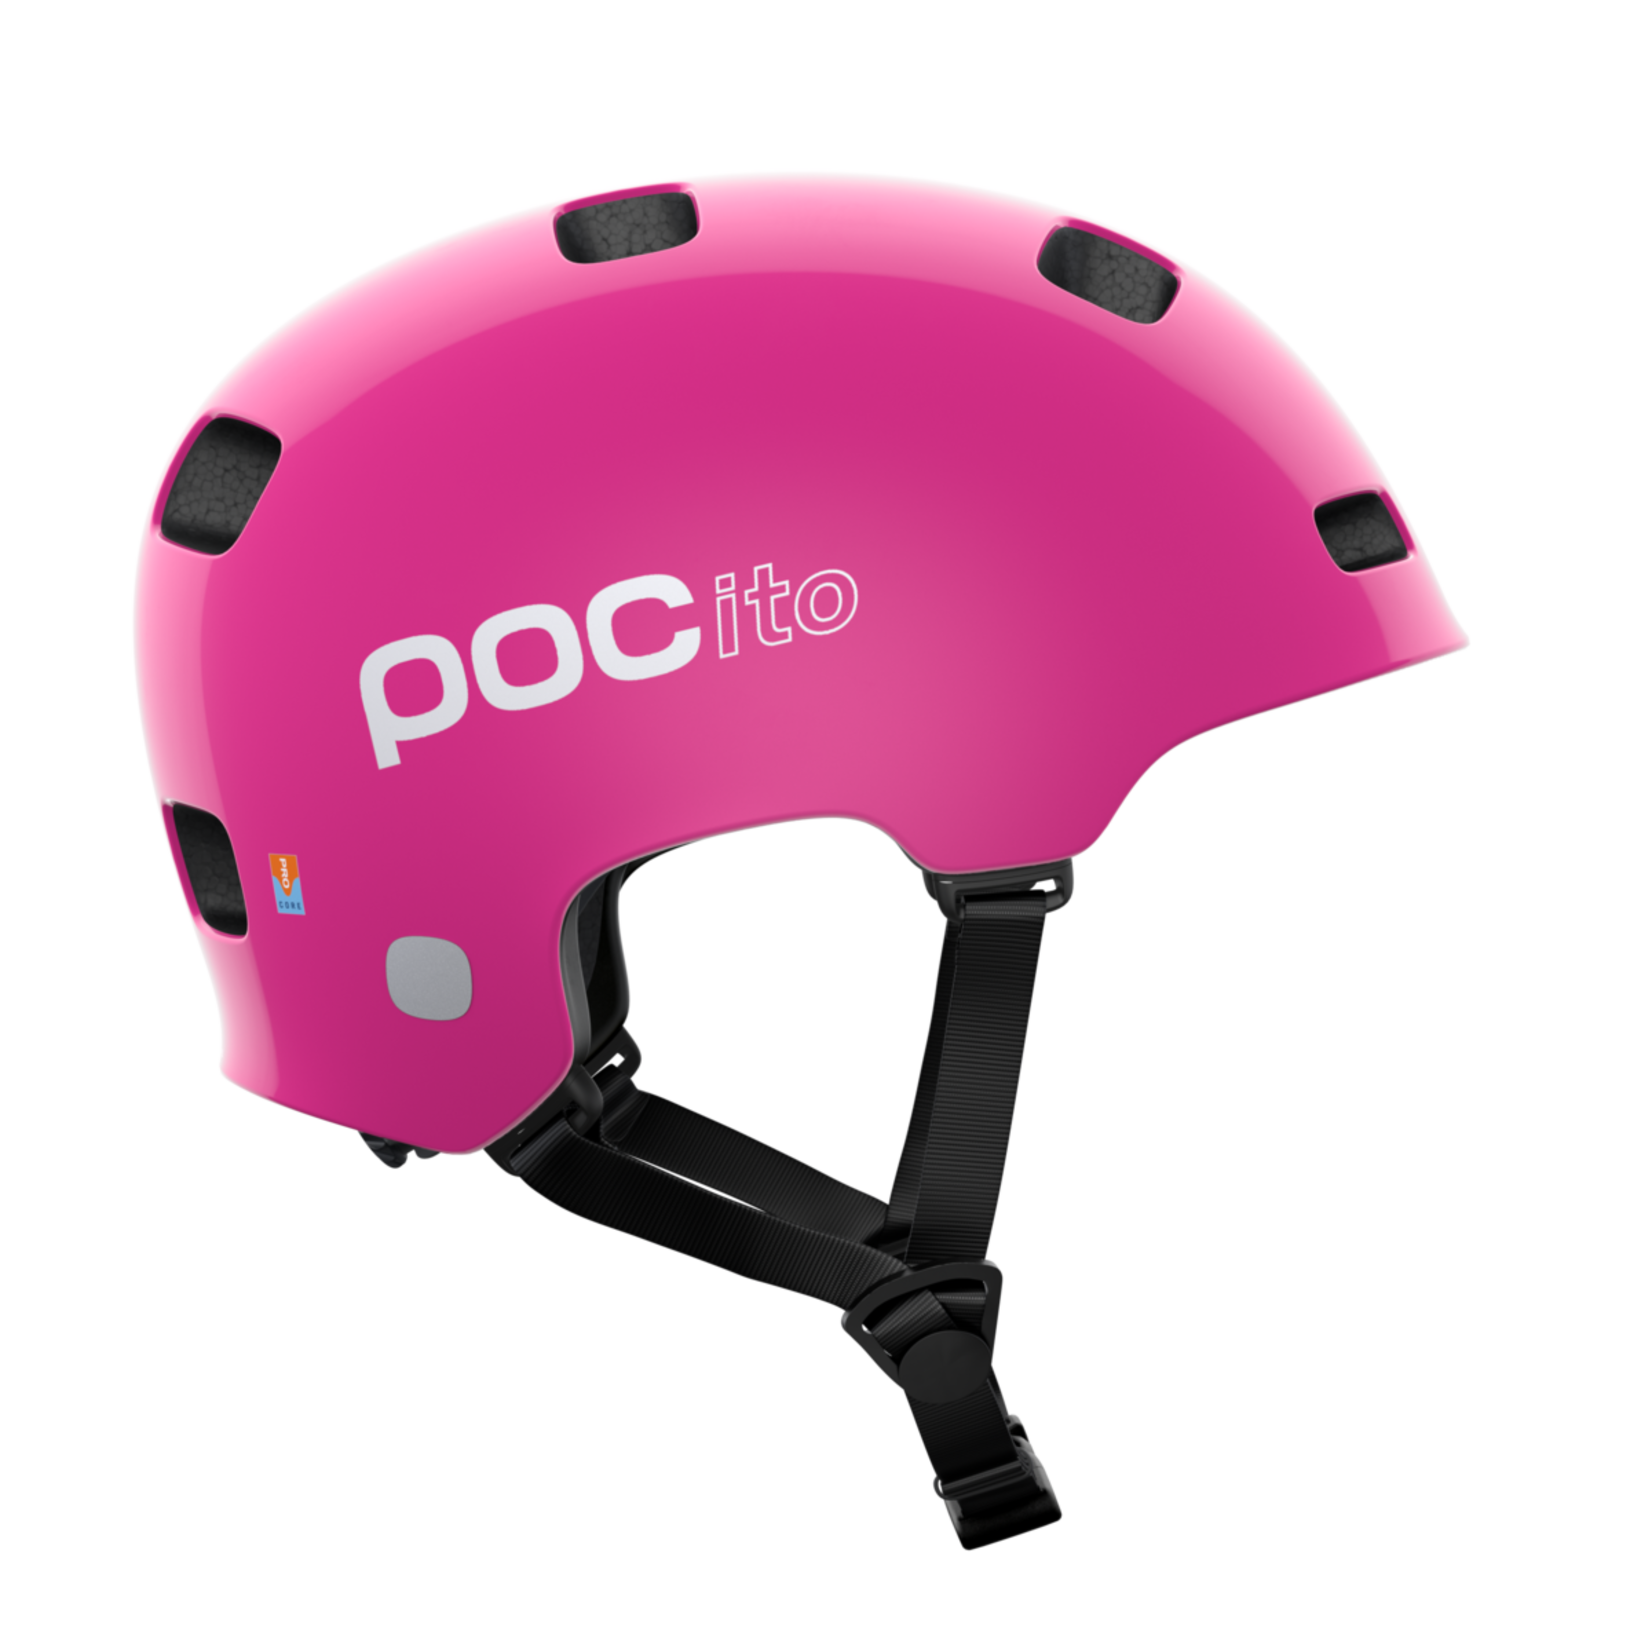 POC Pocito Crane MIPS Bike Helmet